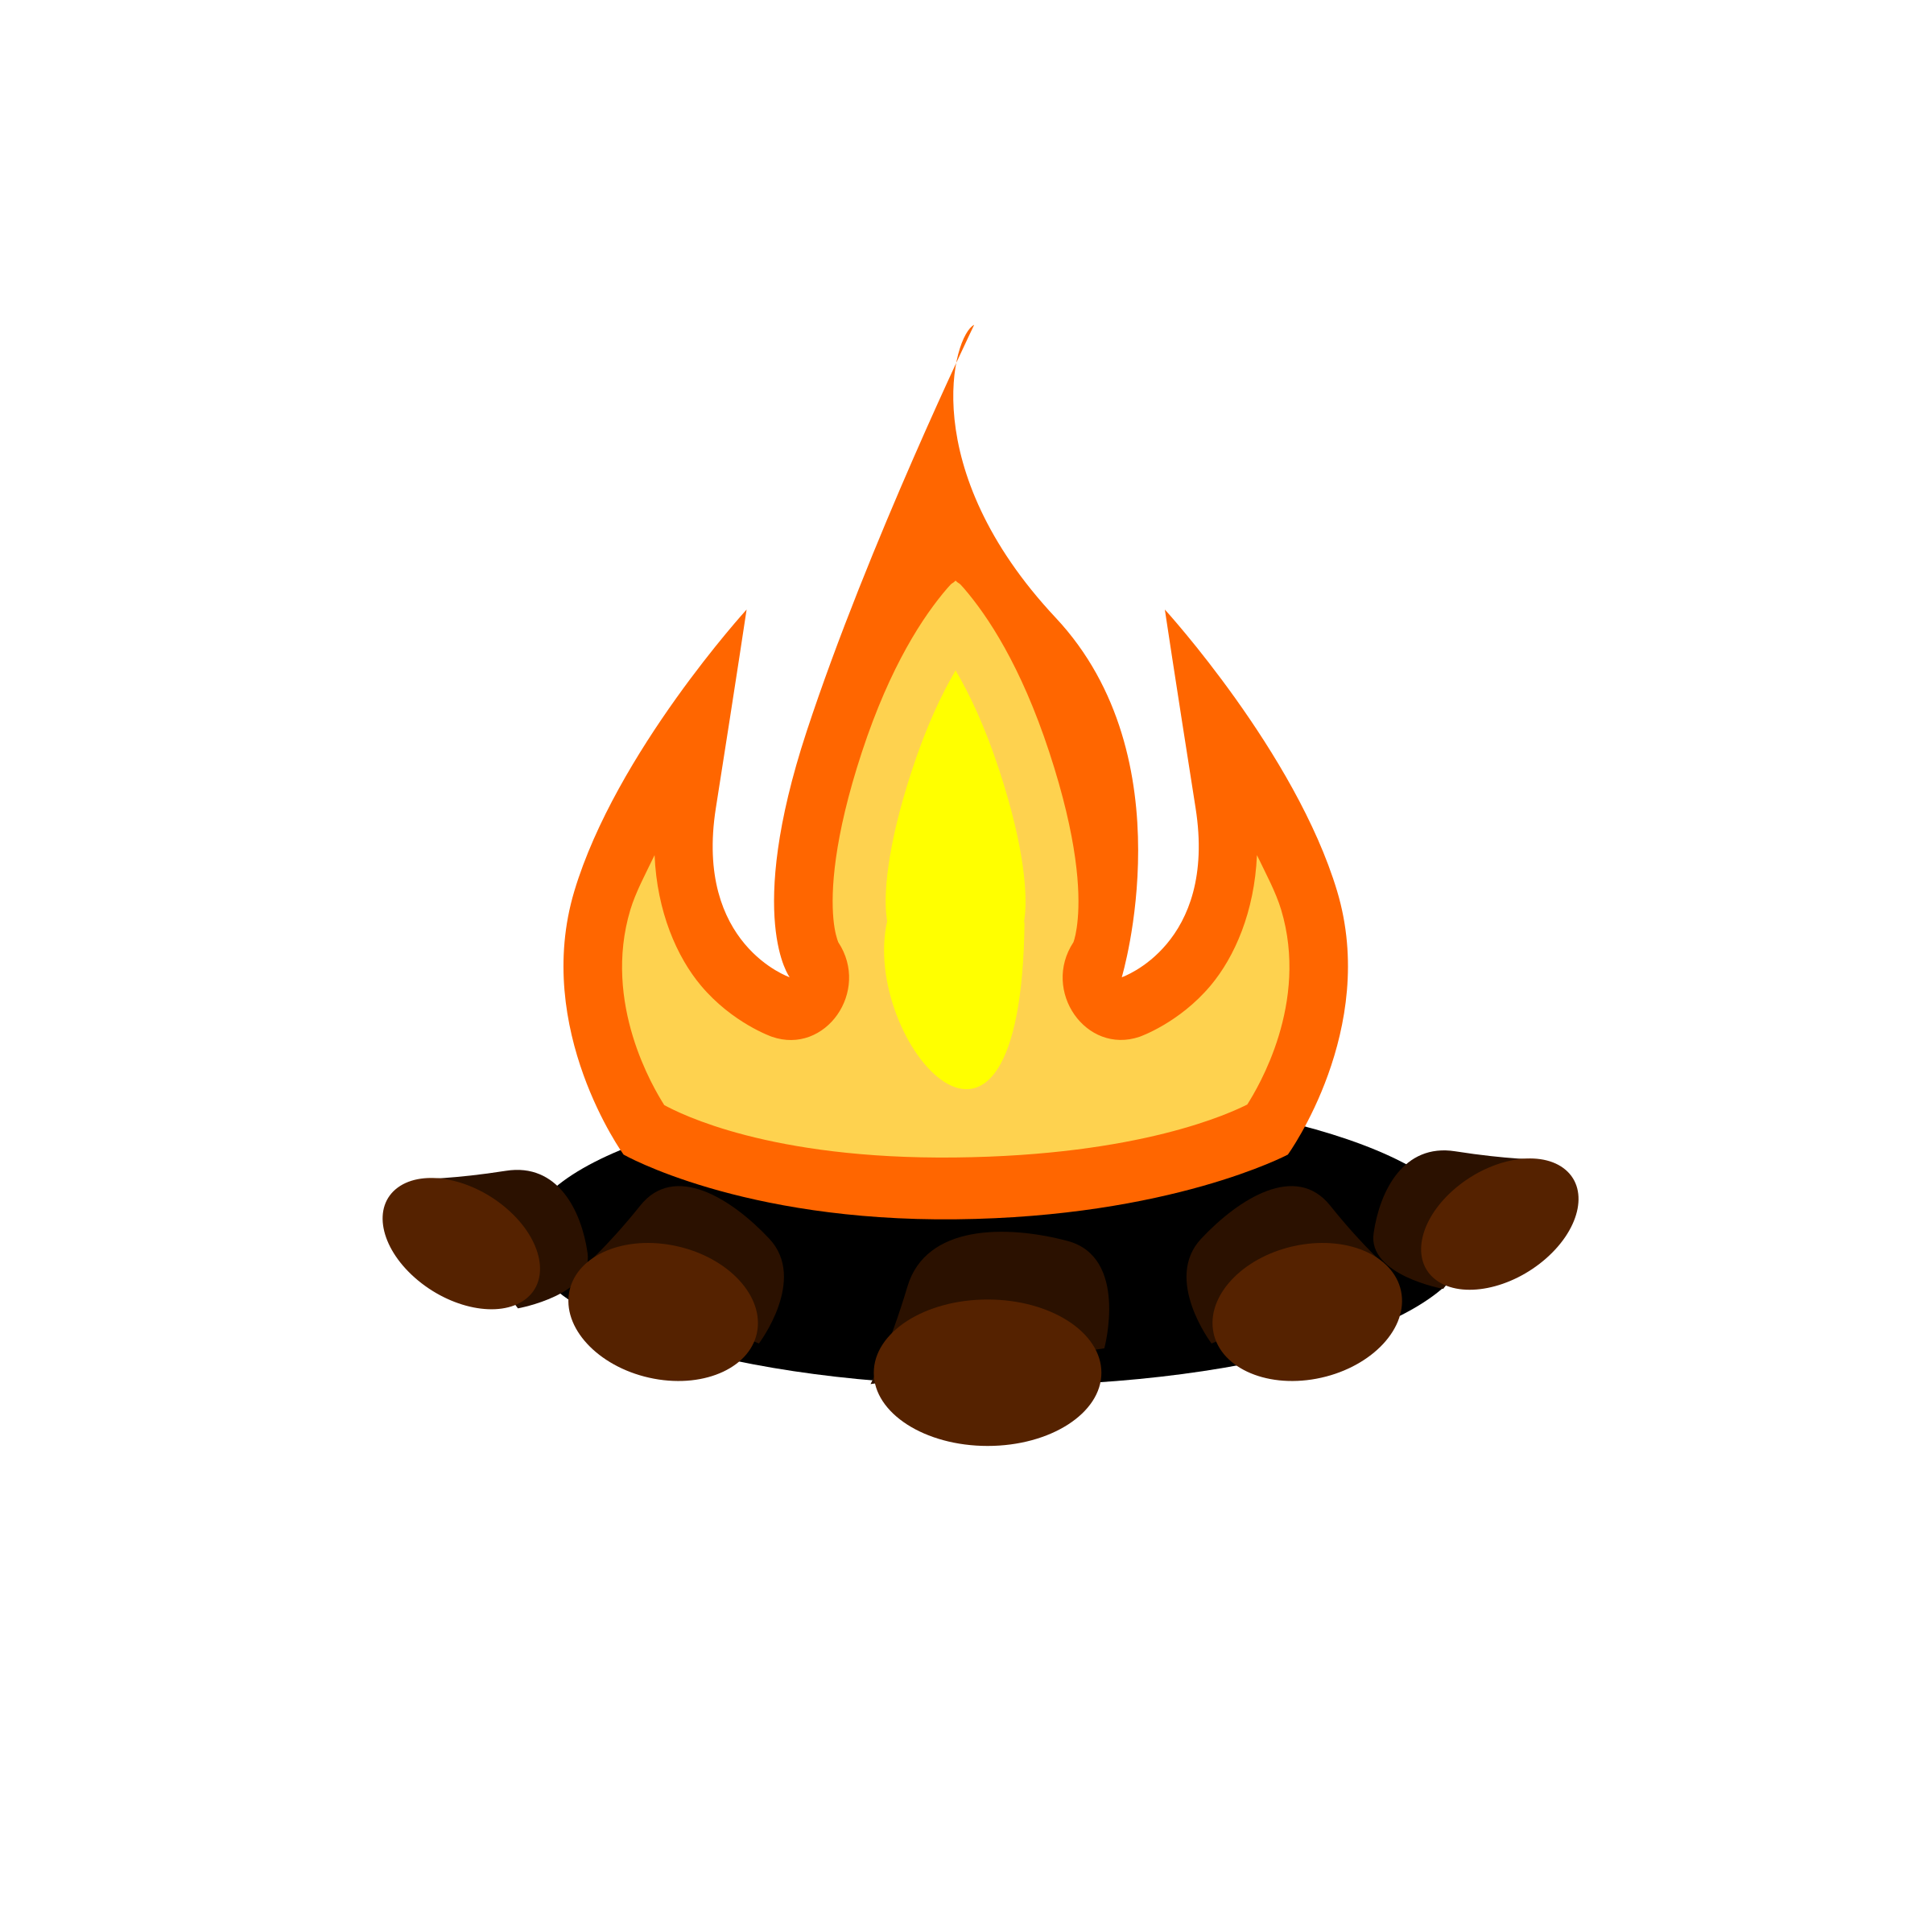 Logo clipart camp. Campfire png images transparent